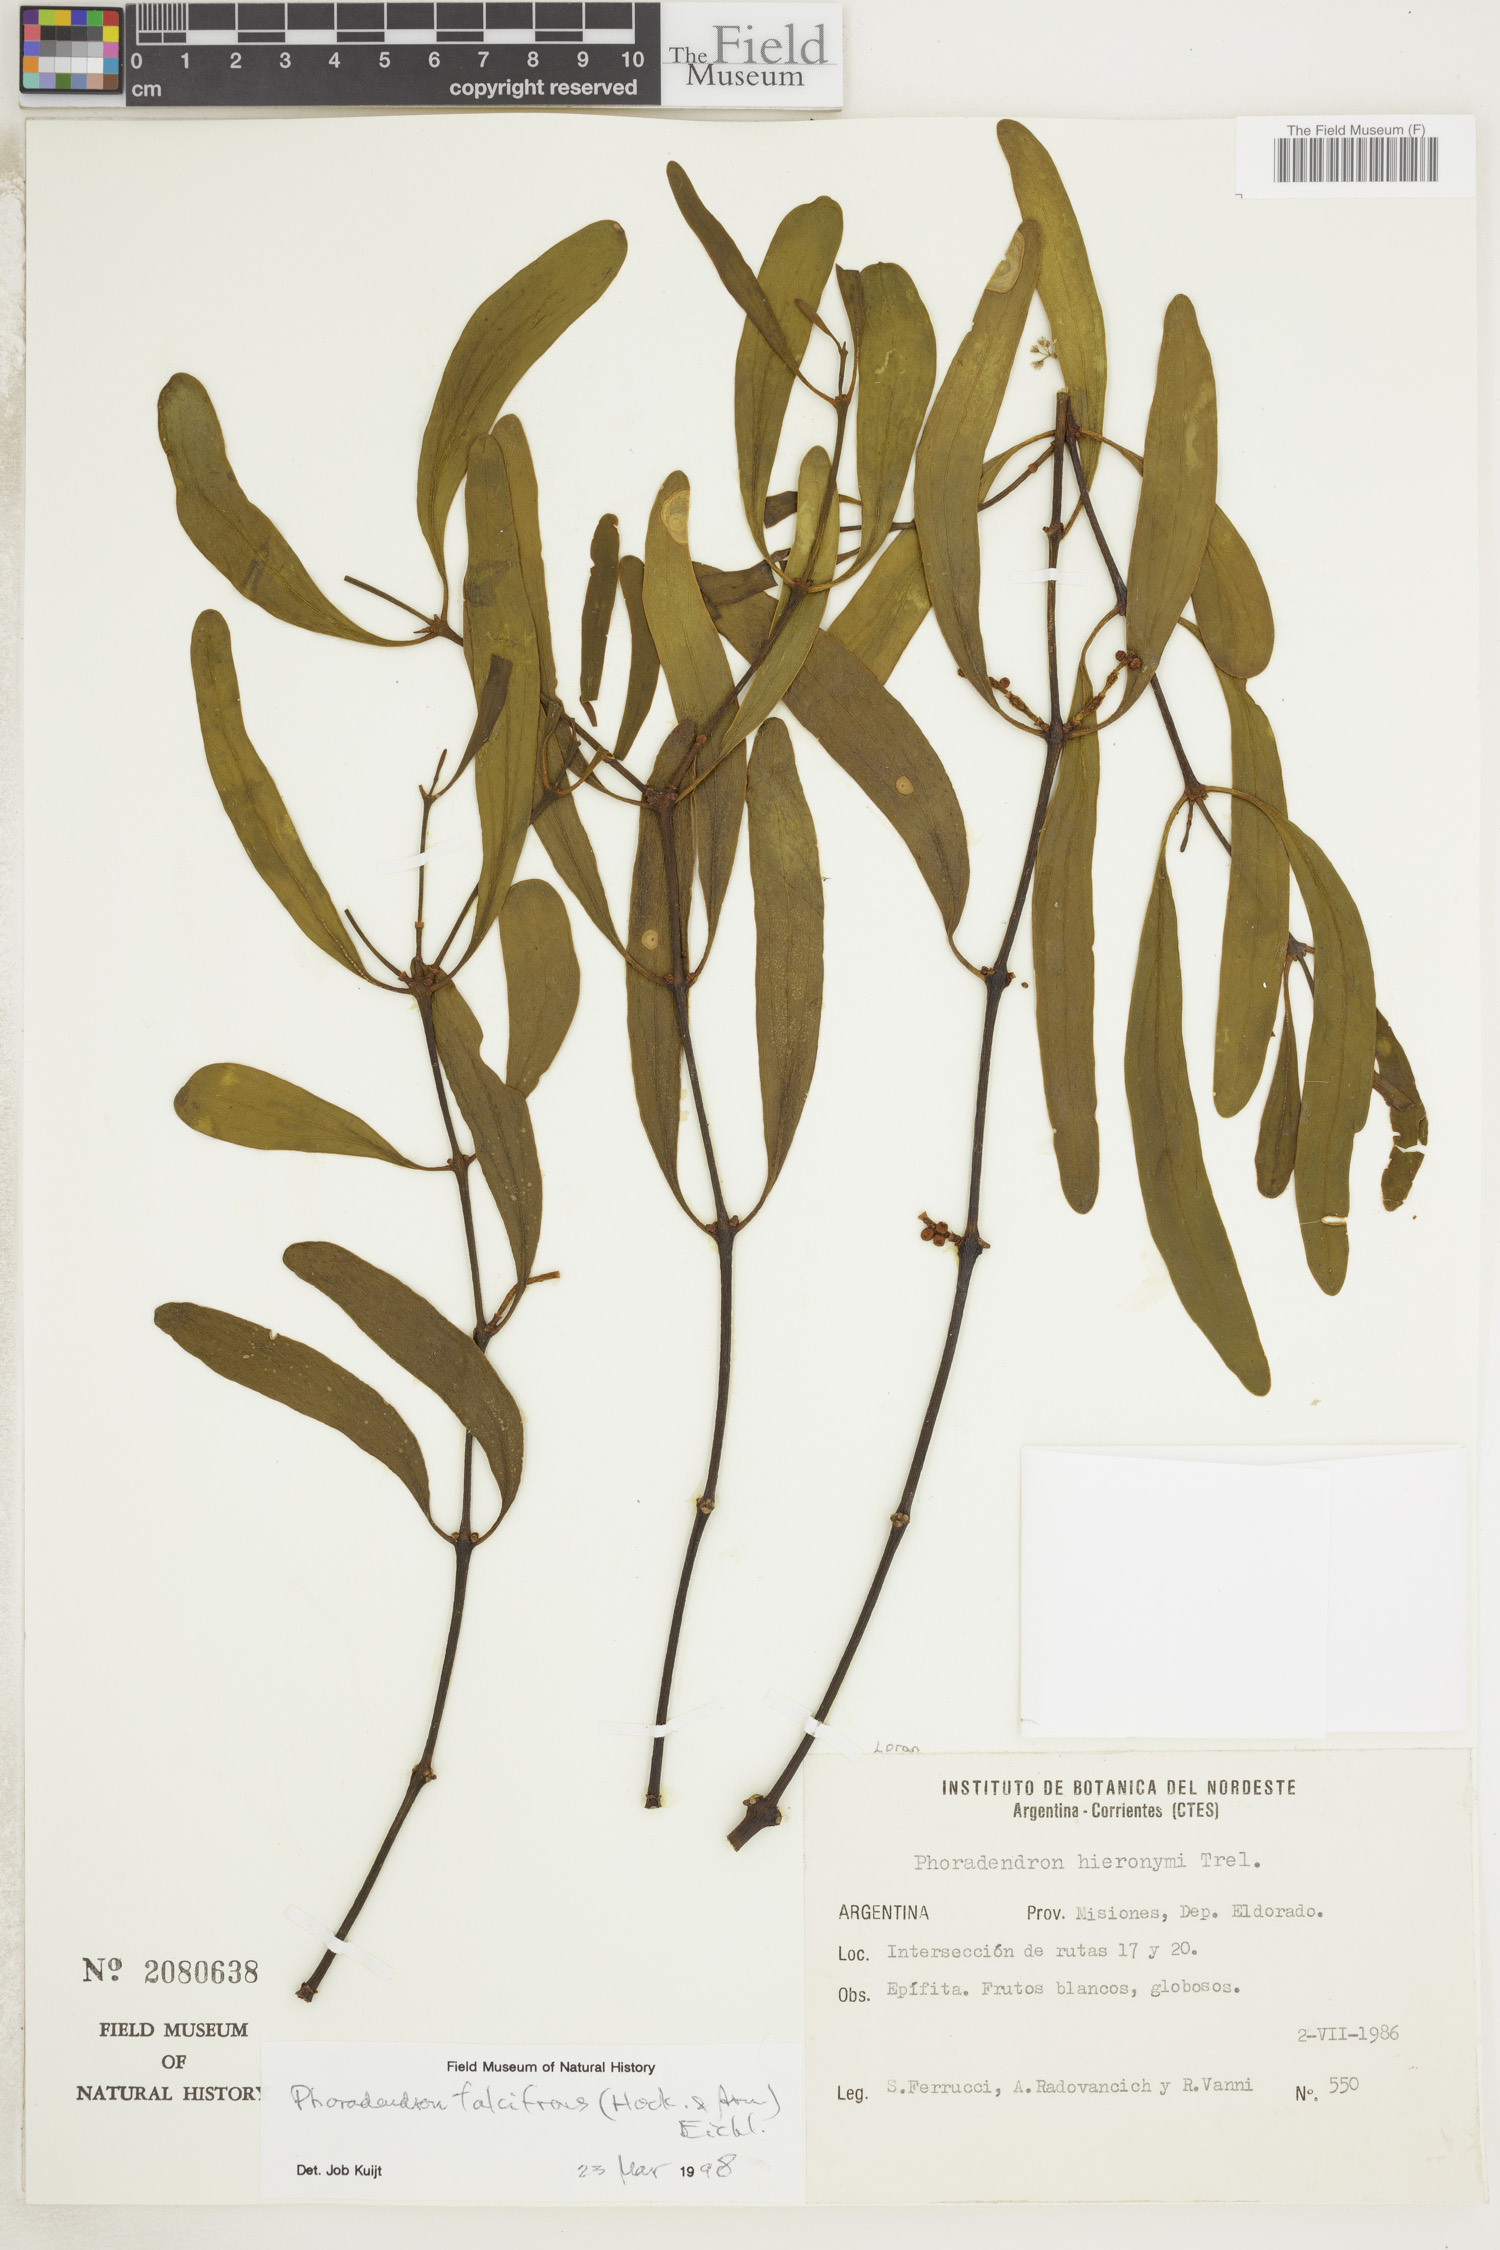 Phoradendron falcifrons image